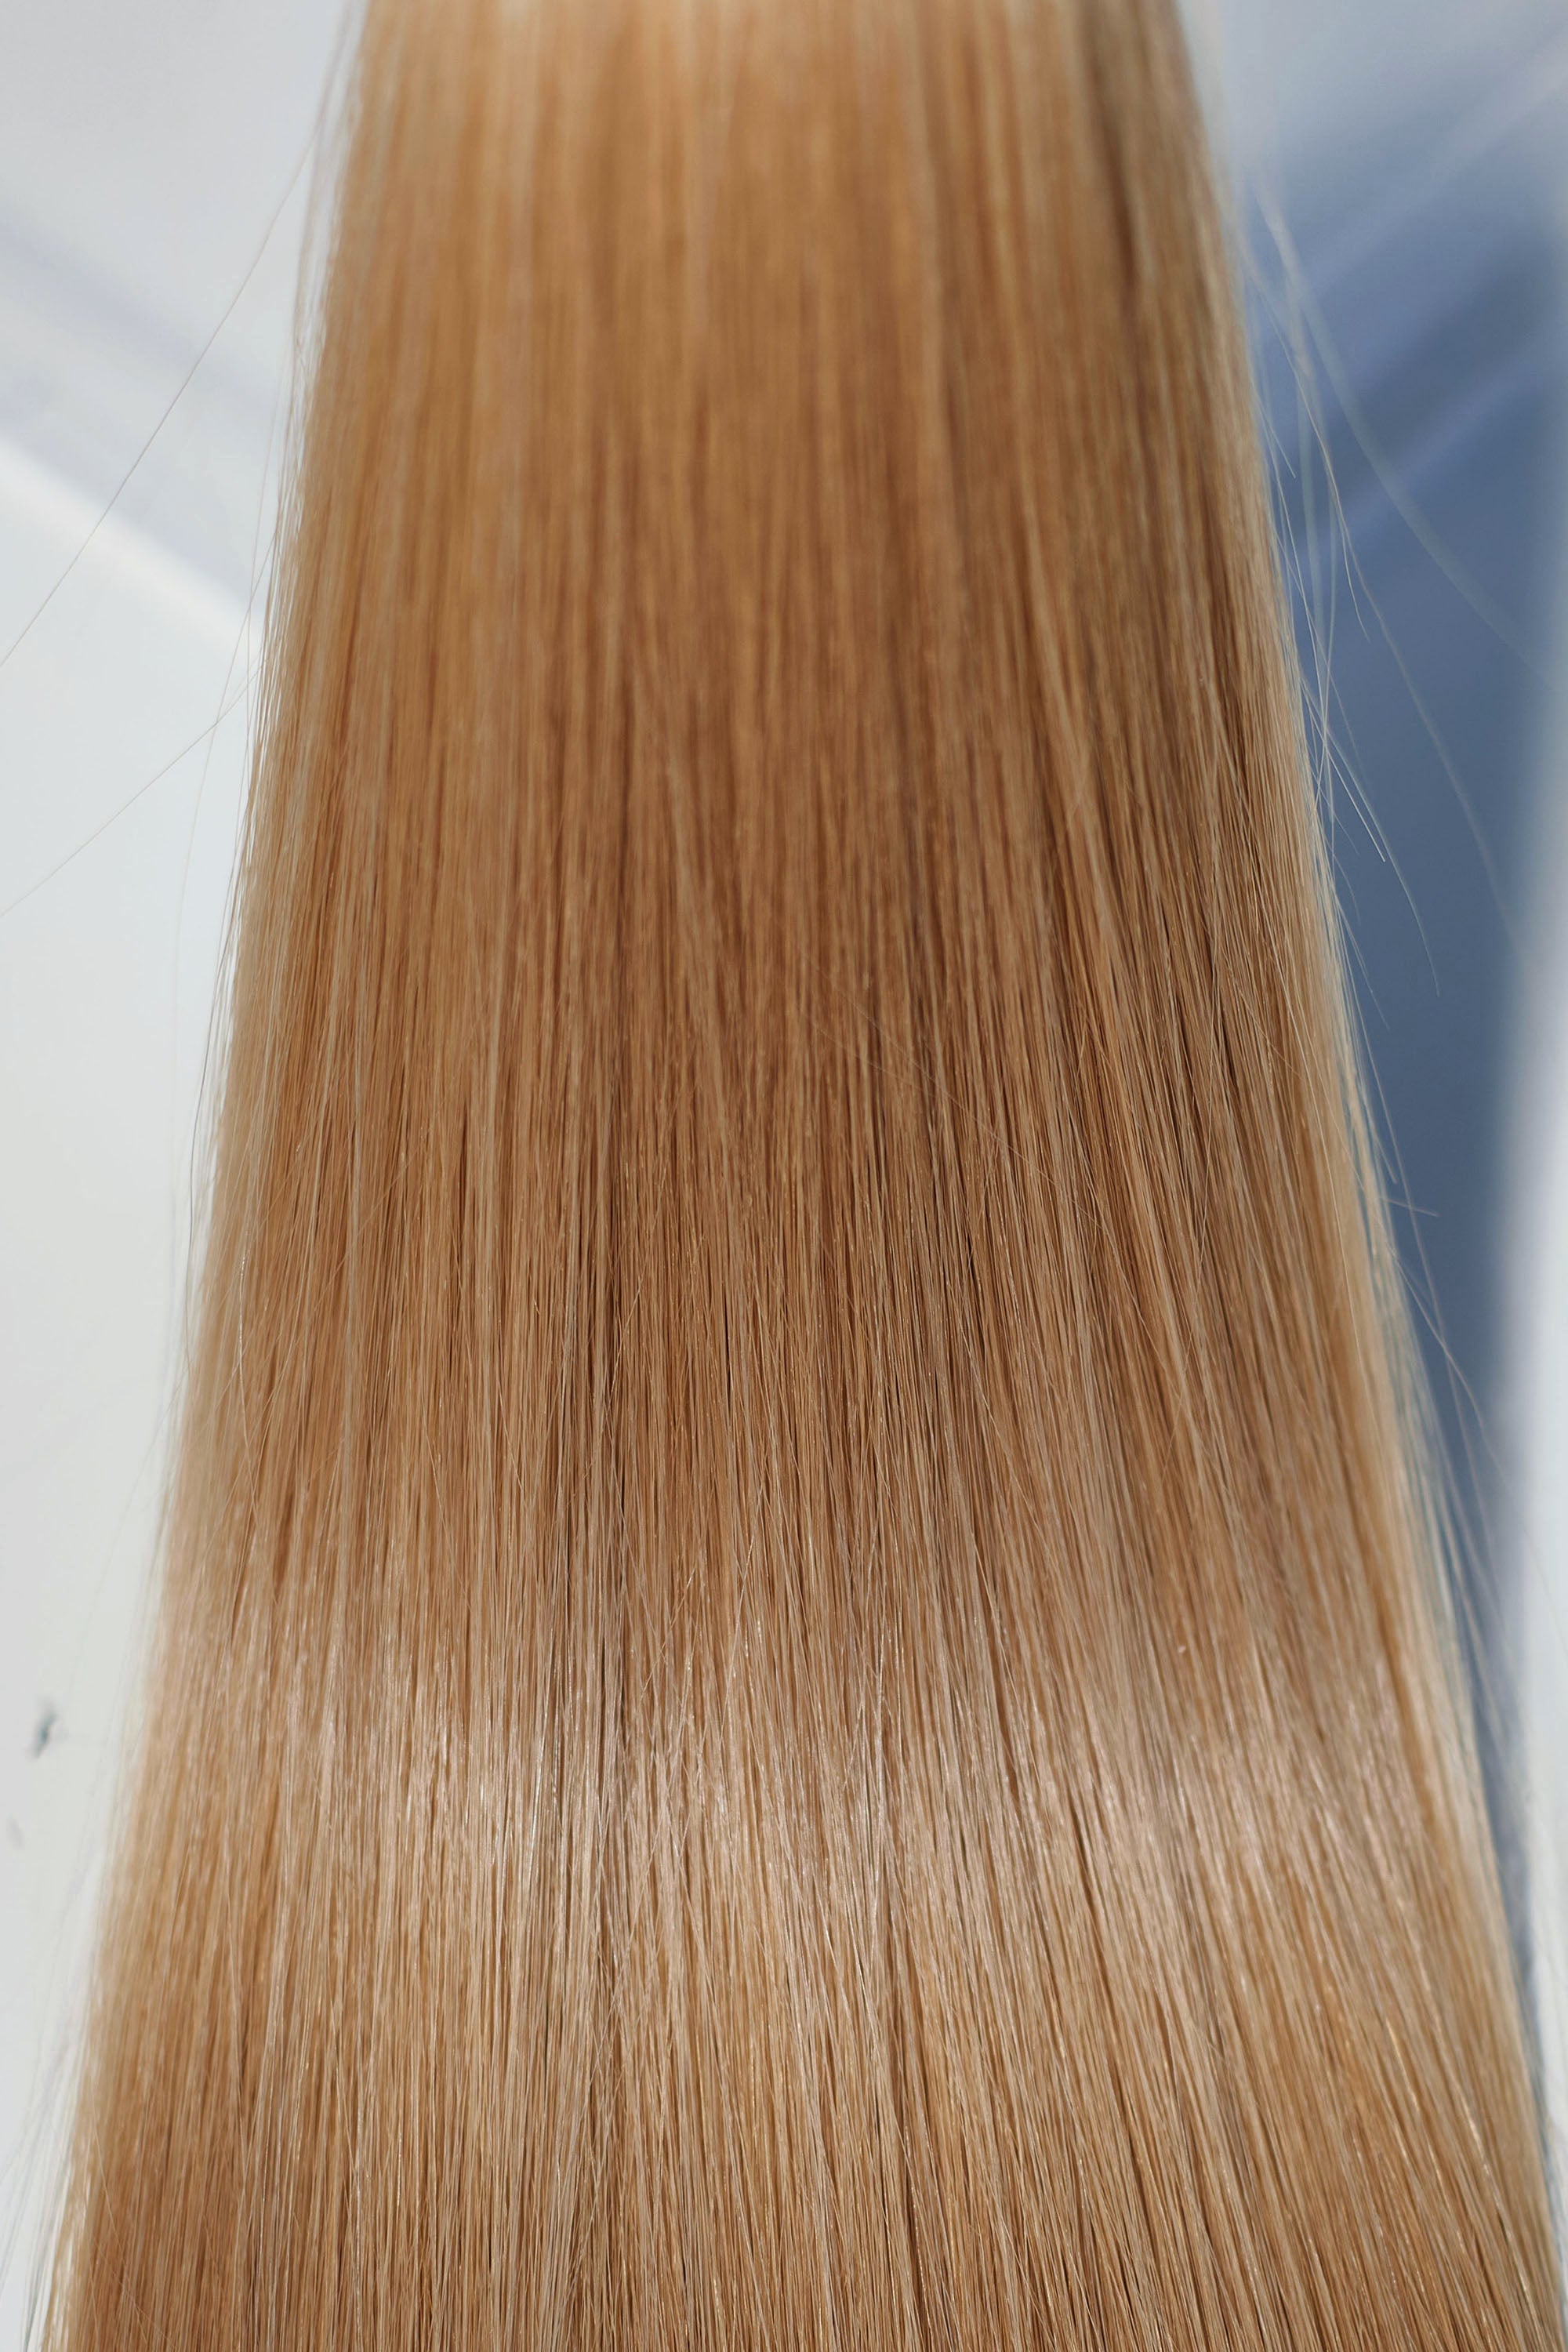 Behair professional Keratin Tip "Premium" 26" (65cm) Natural Straight Gold Sand #18 - 25g (Micro - 0.5g each pcs) hair extensions